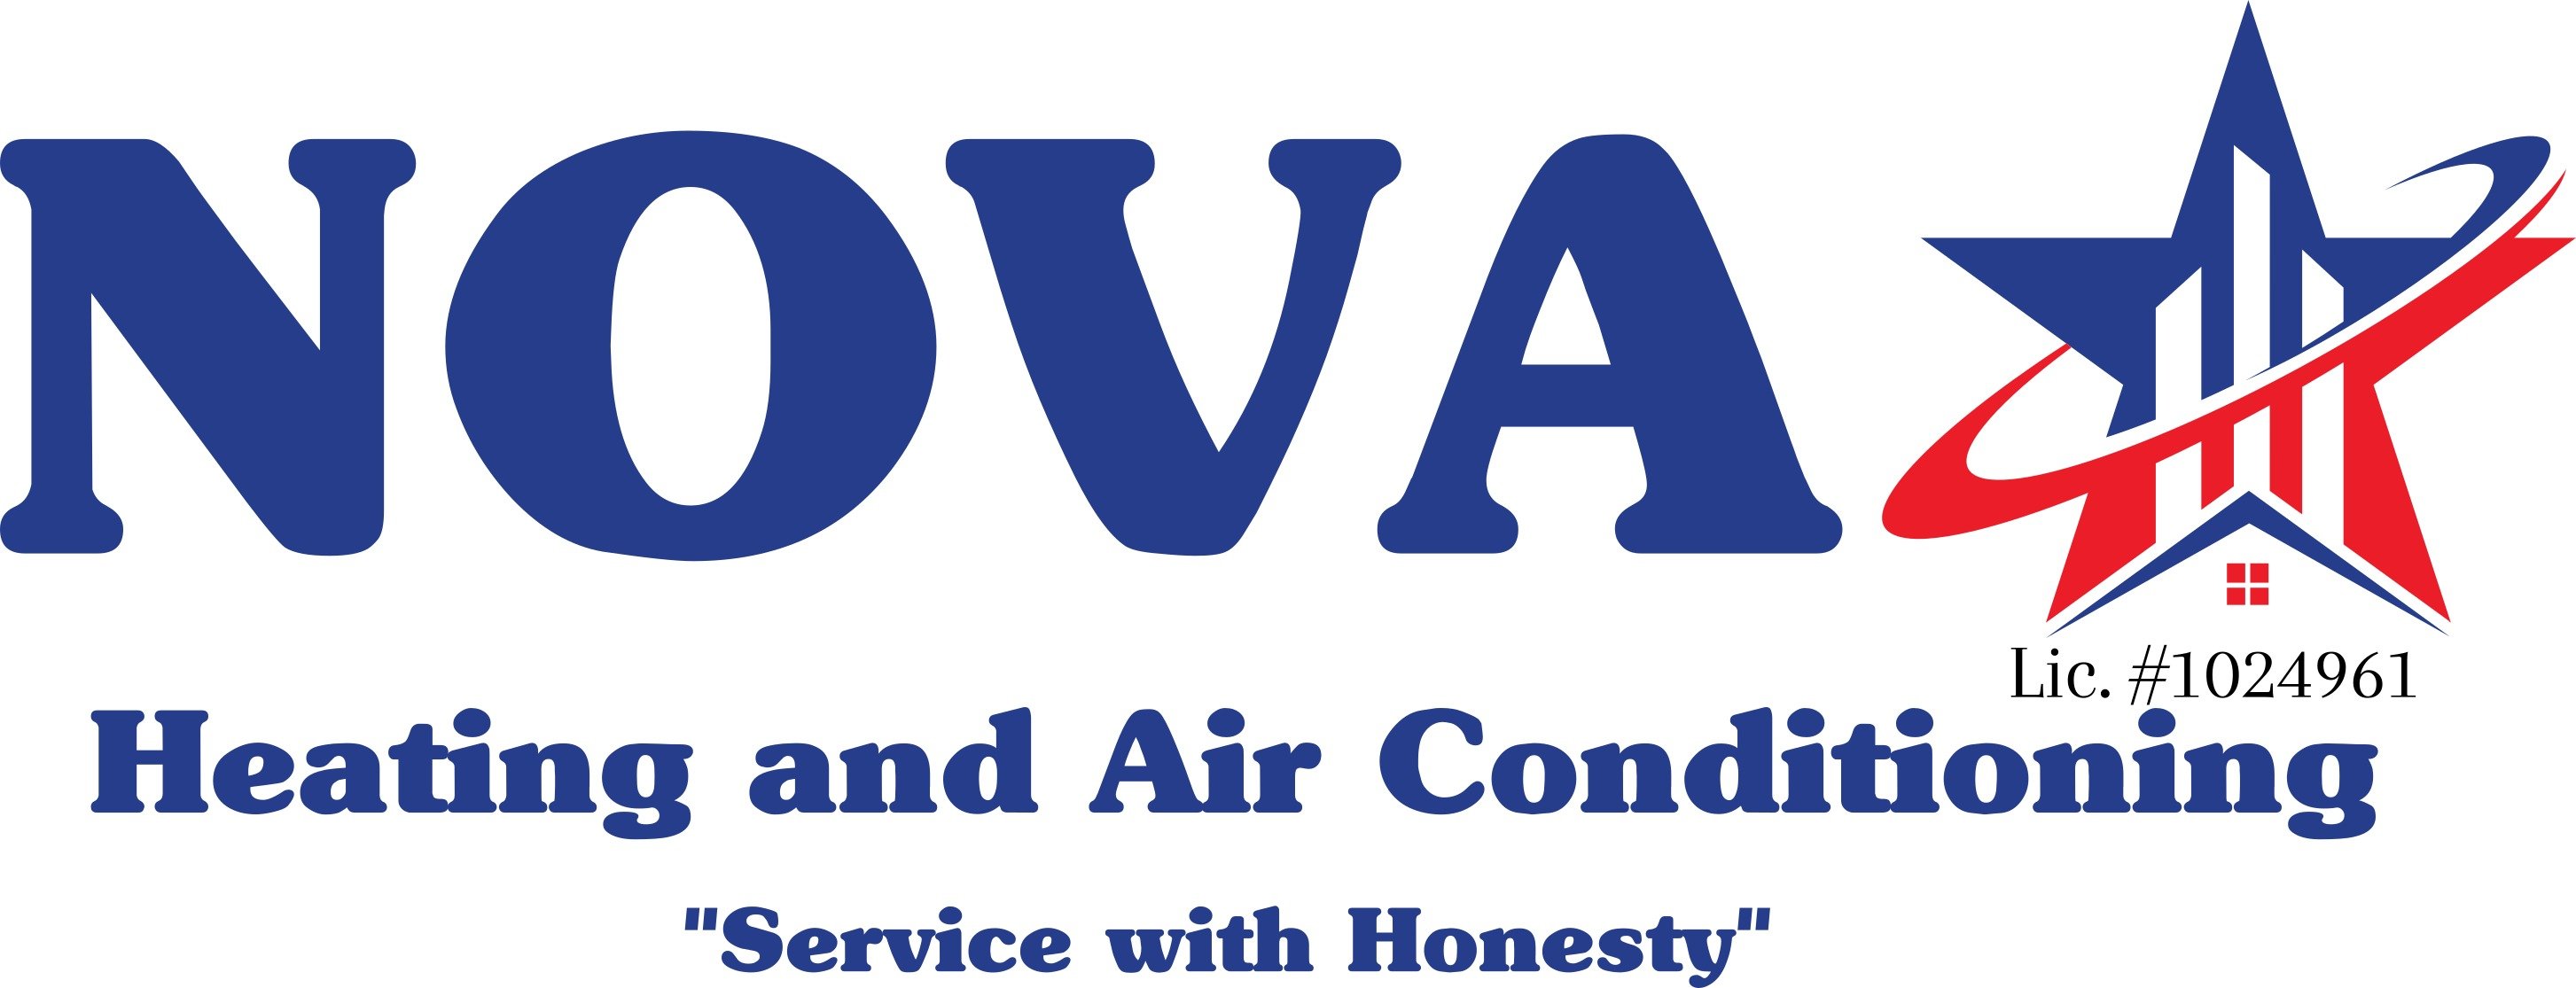 Nova Heating and Air Conditioning Logo